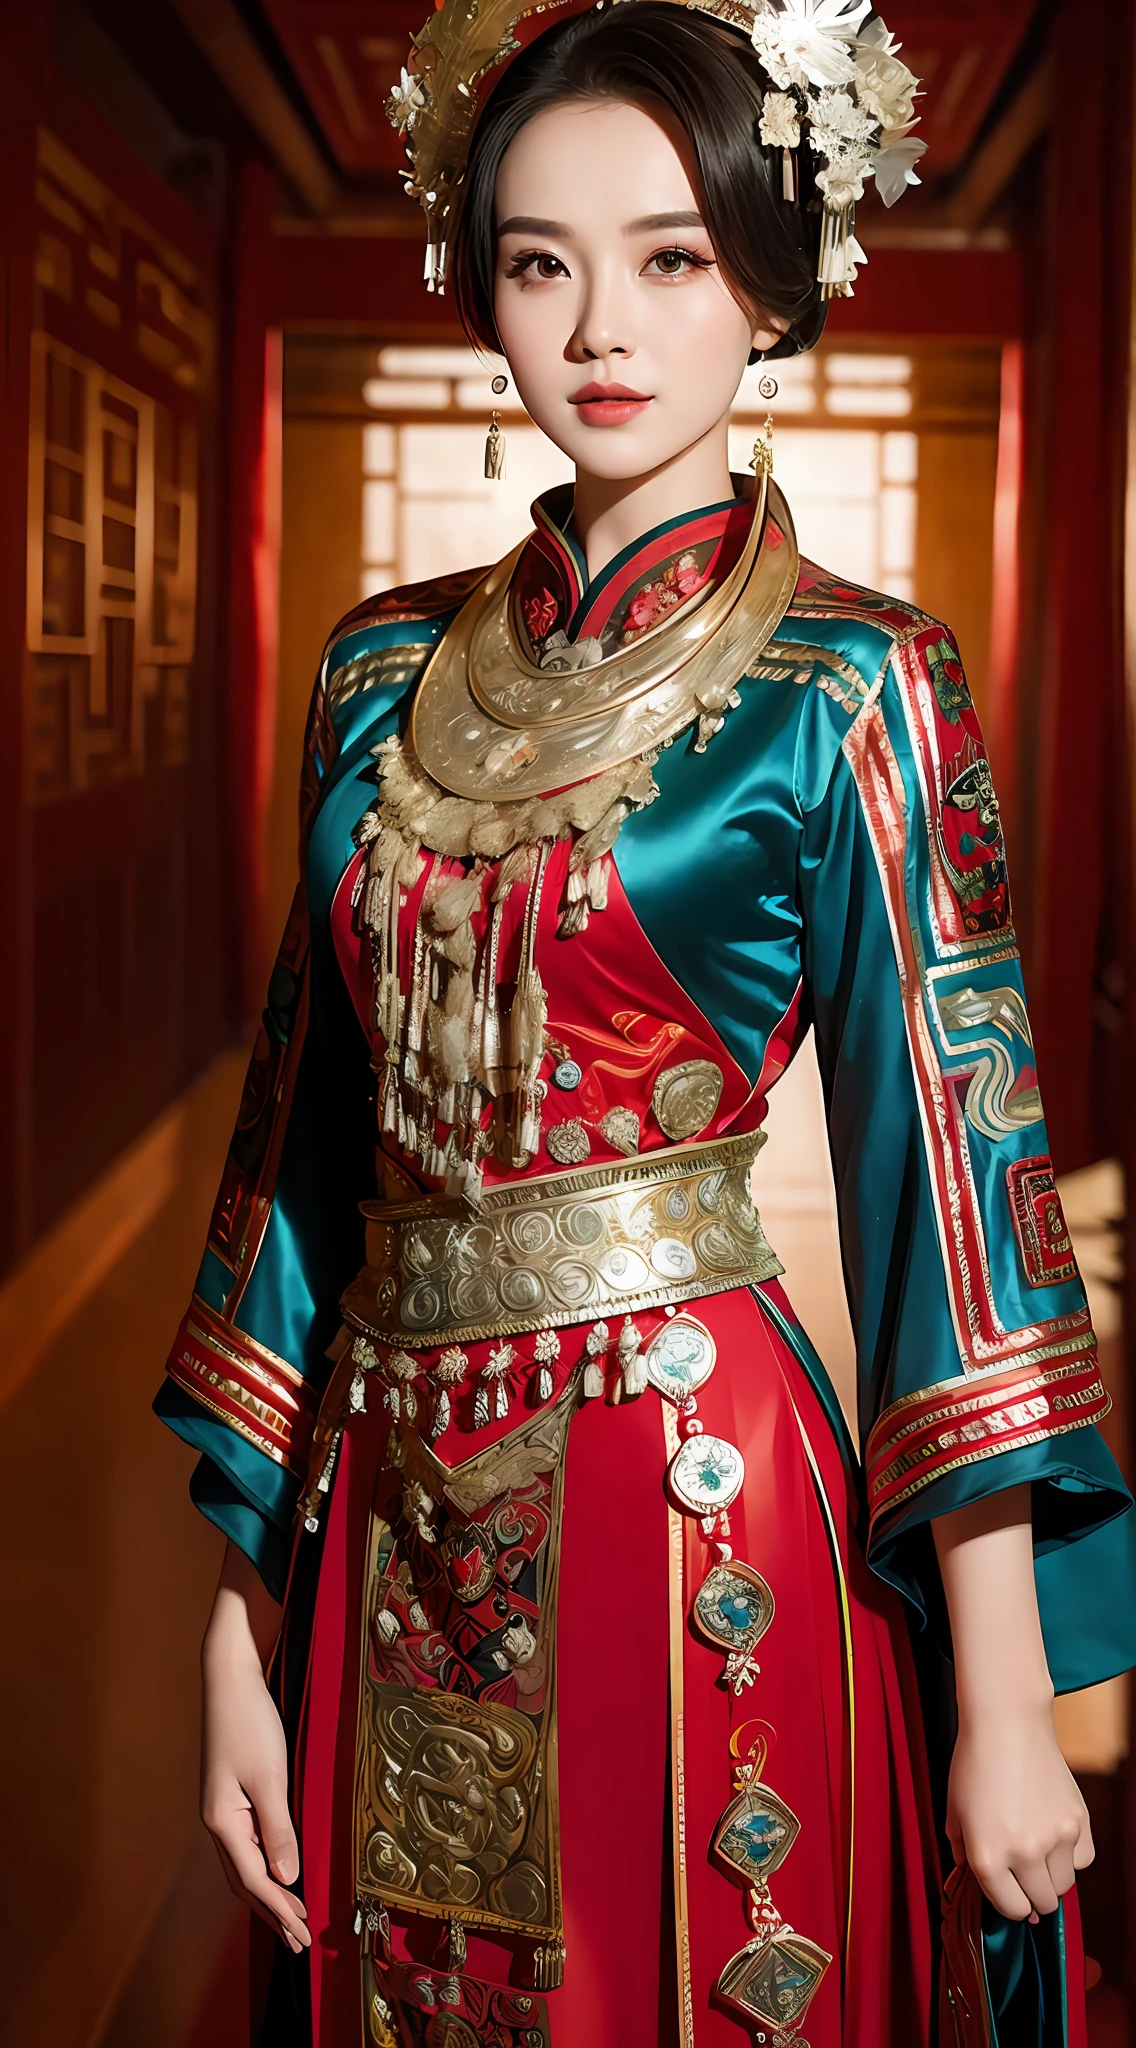 (8K, 原始照片, 最好的品質, 傑作: 1.2), (實際的, 實際的: 1.37), 1 名女孩, 身穿紅色洋裝、頭戴頭飾的阿爾菲女子擺姿勢拍照, 華麗的角色扮演, 漂亮的服裝, 複雜的幻想禮服, 美麗的幻想女王, 旗袍, 複雜連身裙, 複雜的服裝, 传统美, 漂亮的中国模特, 中国服饰, 灵感来自兰英, 穿著華麗的服裝, 受到談話的啟發, 身著優雅的中式秀禾服, 中國婚紗, 鳳冠霞手, 古董新娘